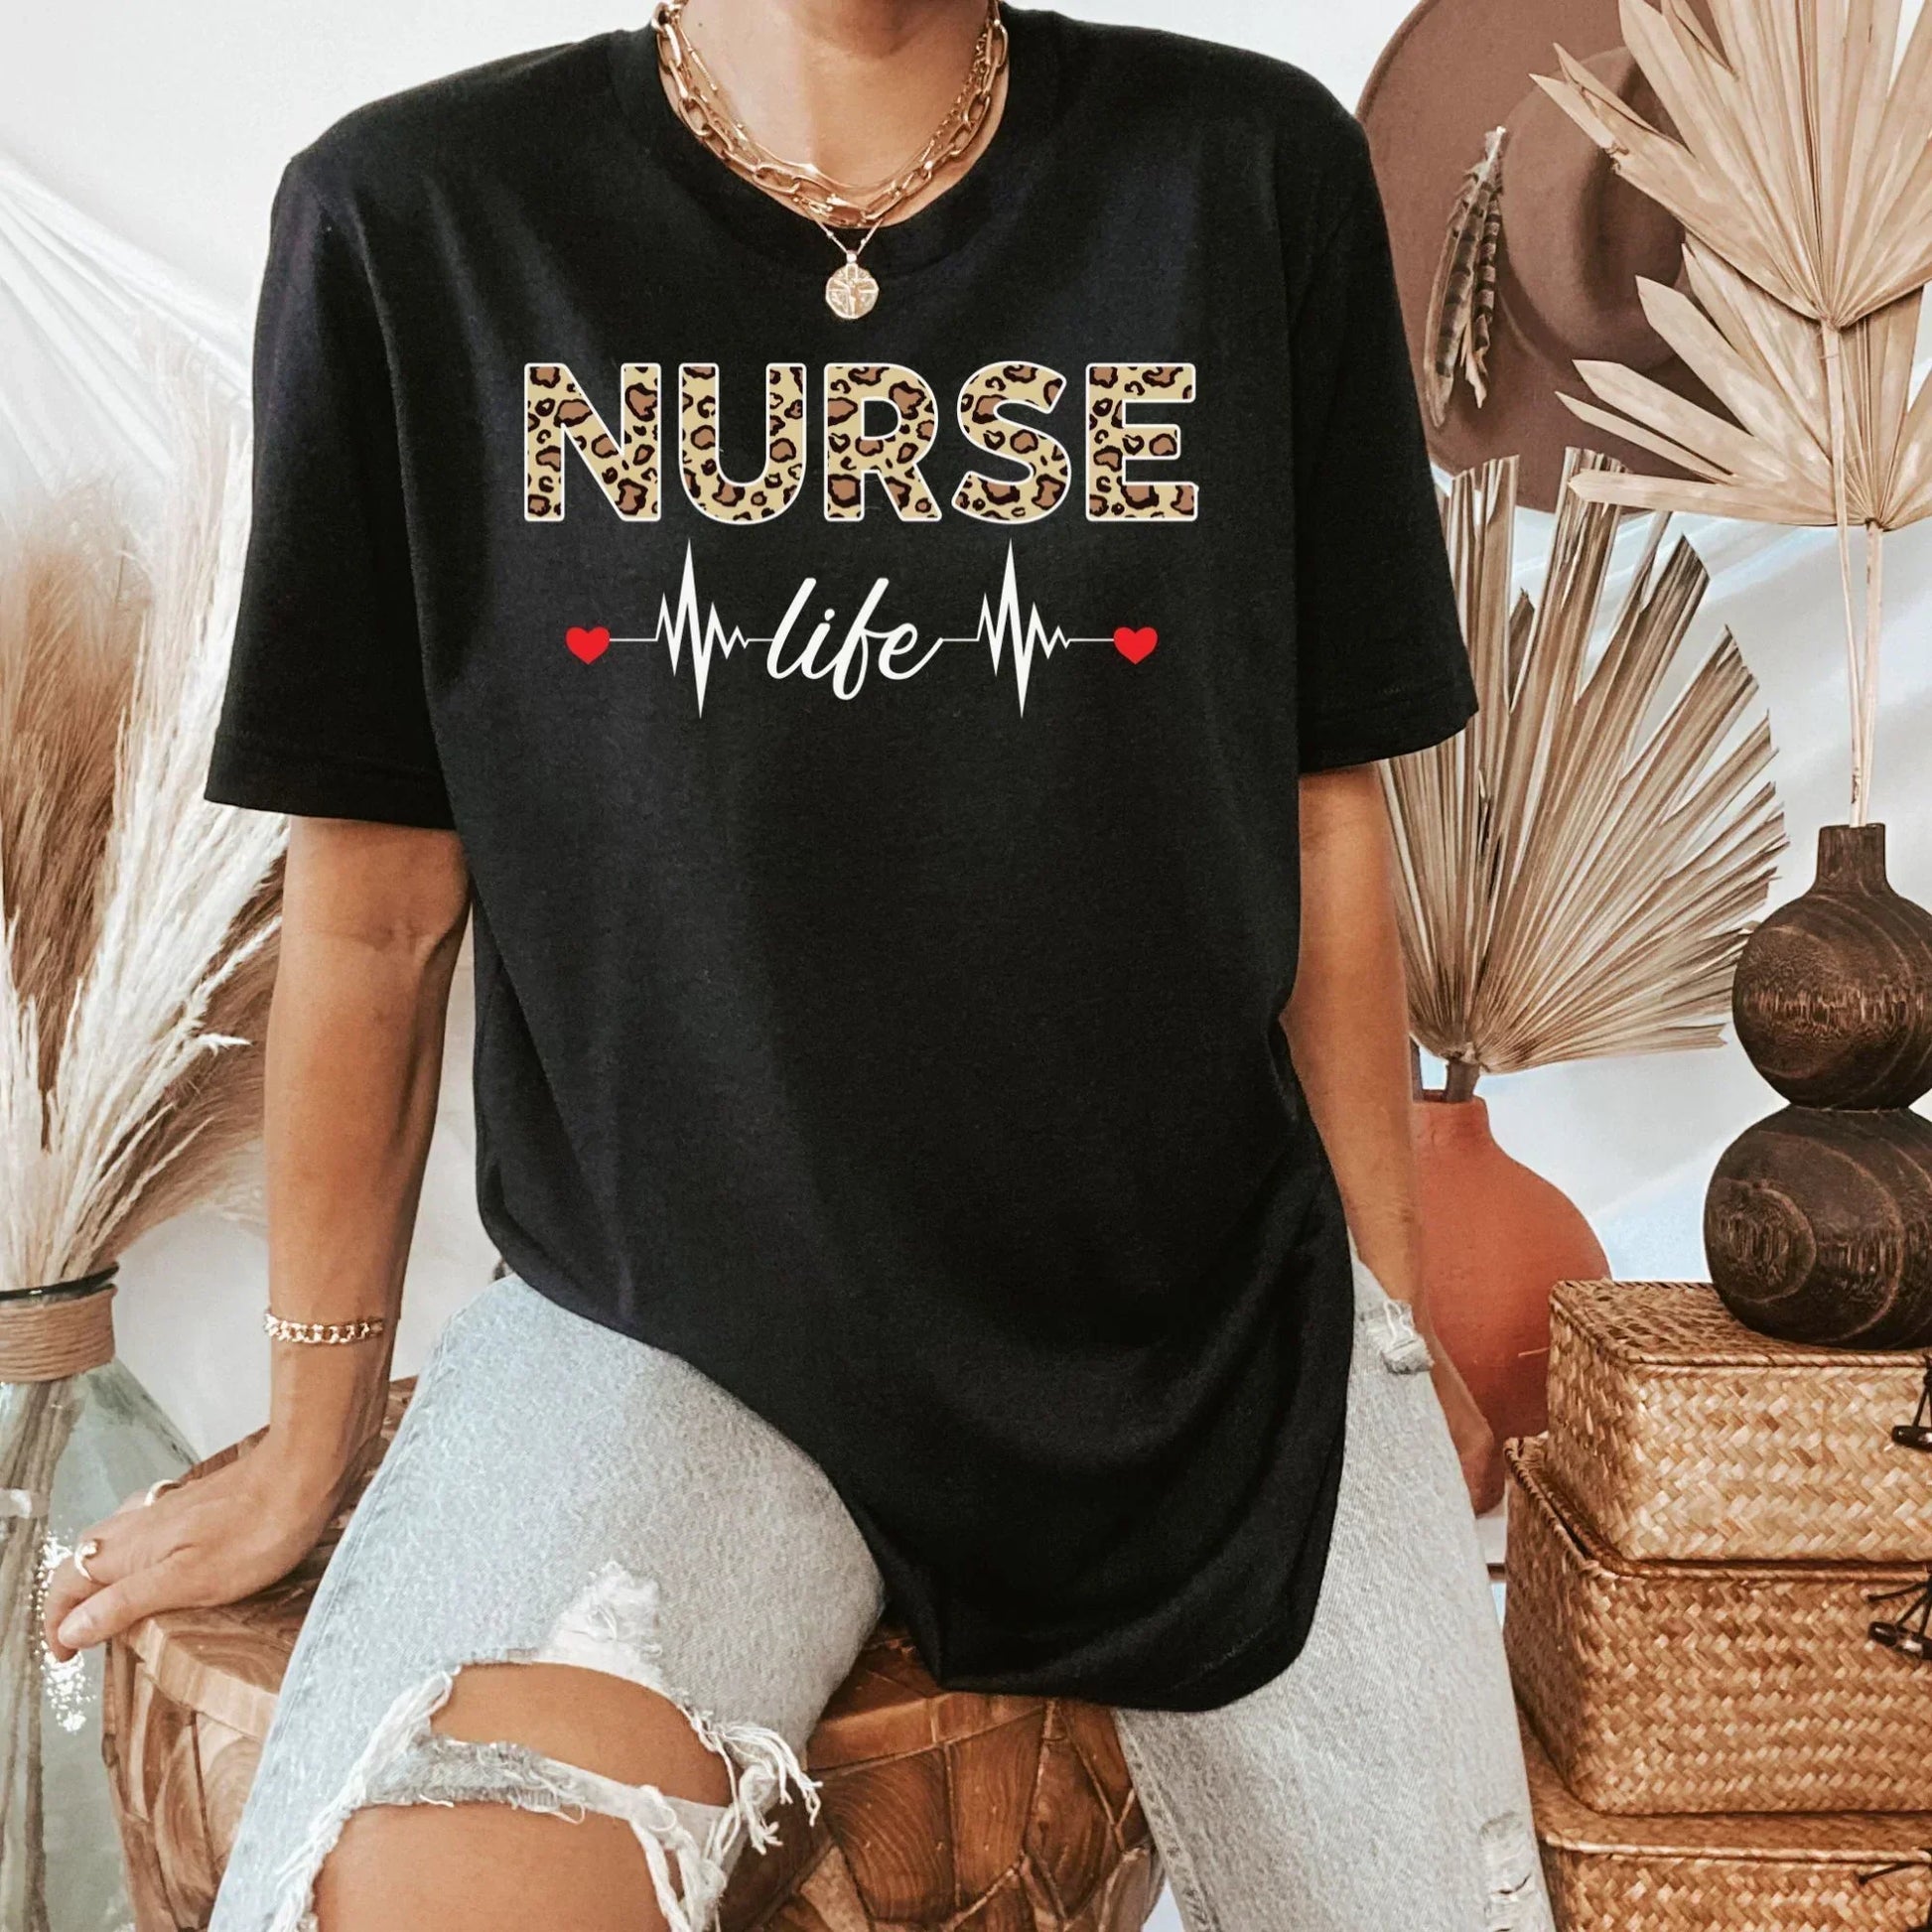 Registered Nurse Shirt, Nursing Student, Pediatric Nurse, ER Nurse Sweatshirt, Nurse Gift, Nurse Hoodie, Funny Nurse Shirt, Nurse Practitioner HMDesignStudioUS